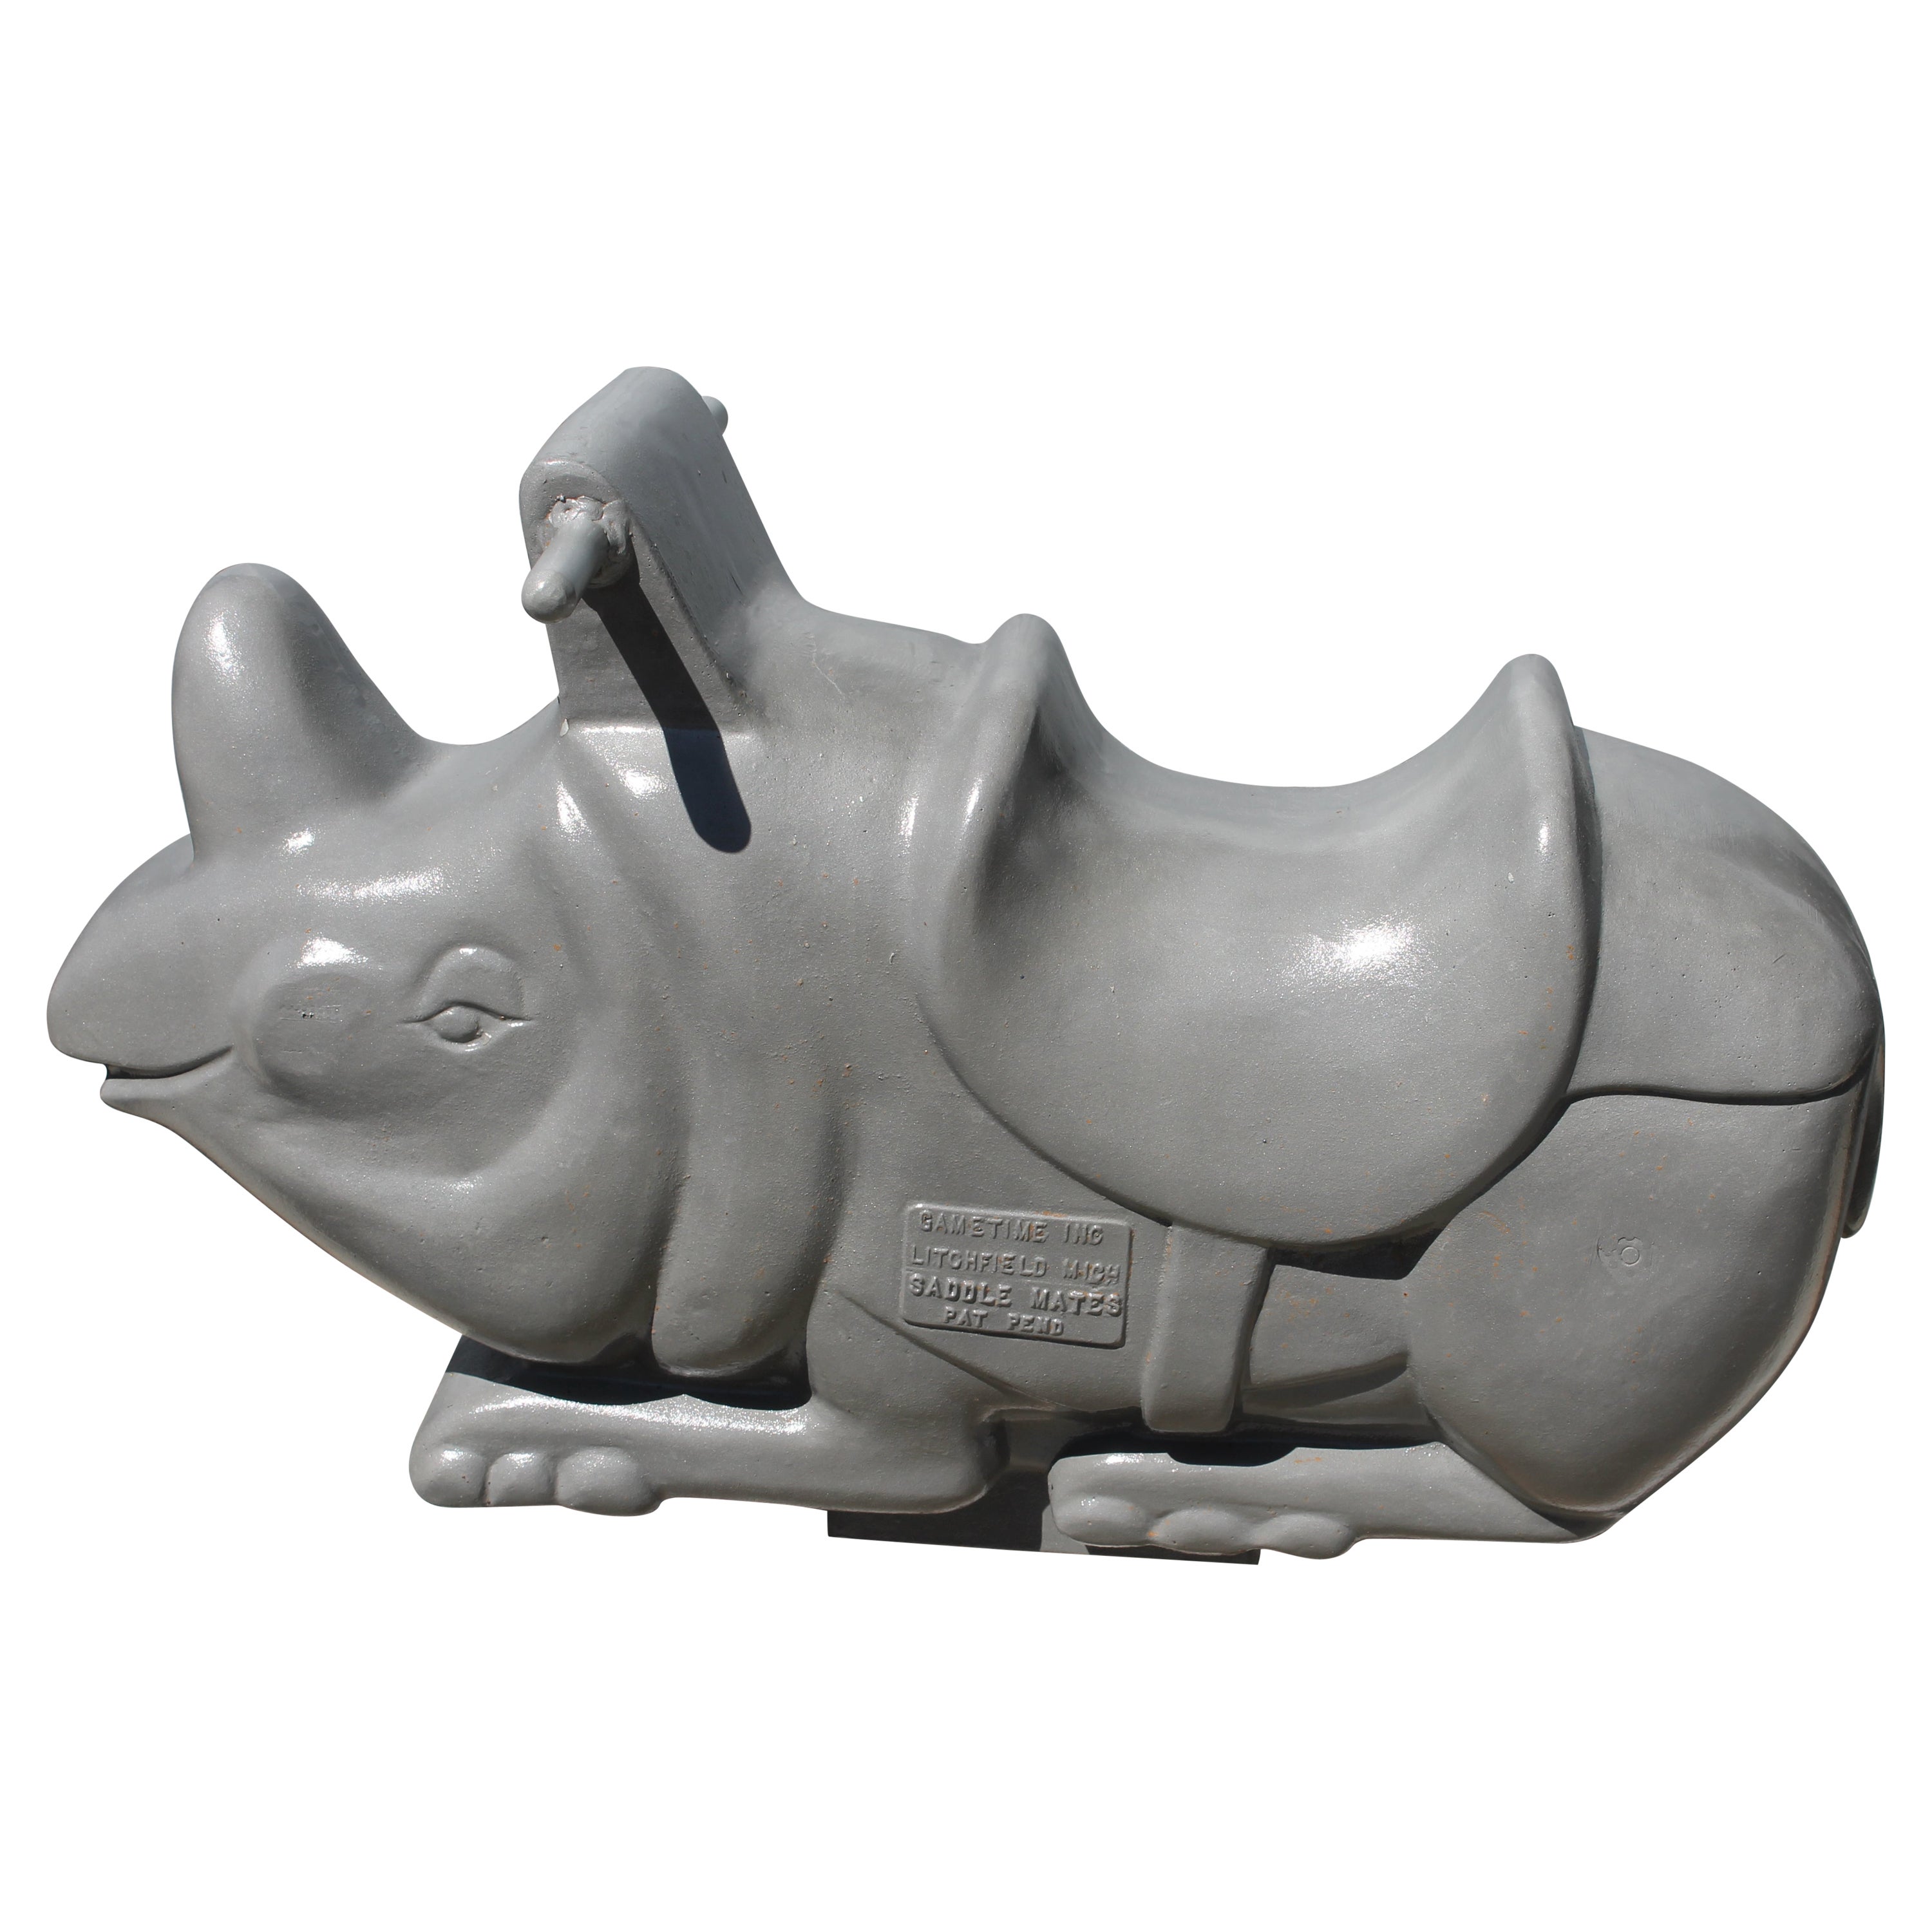 Aluminum Rhino Playground Toy Sculpture